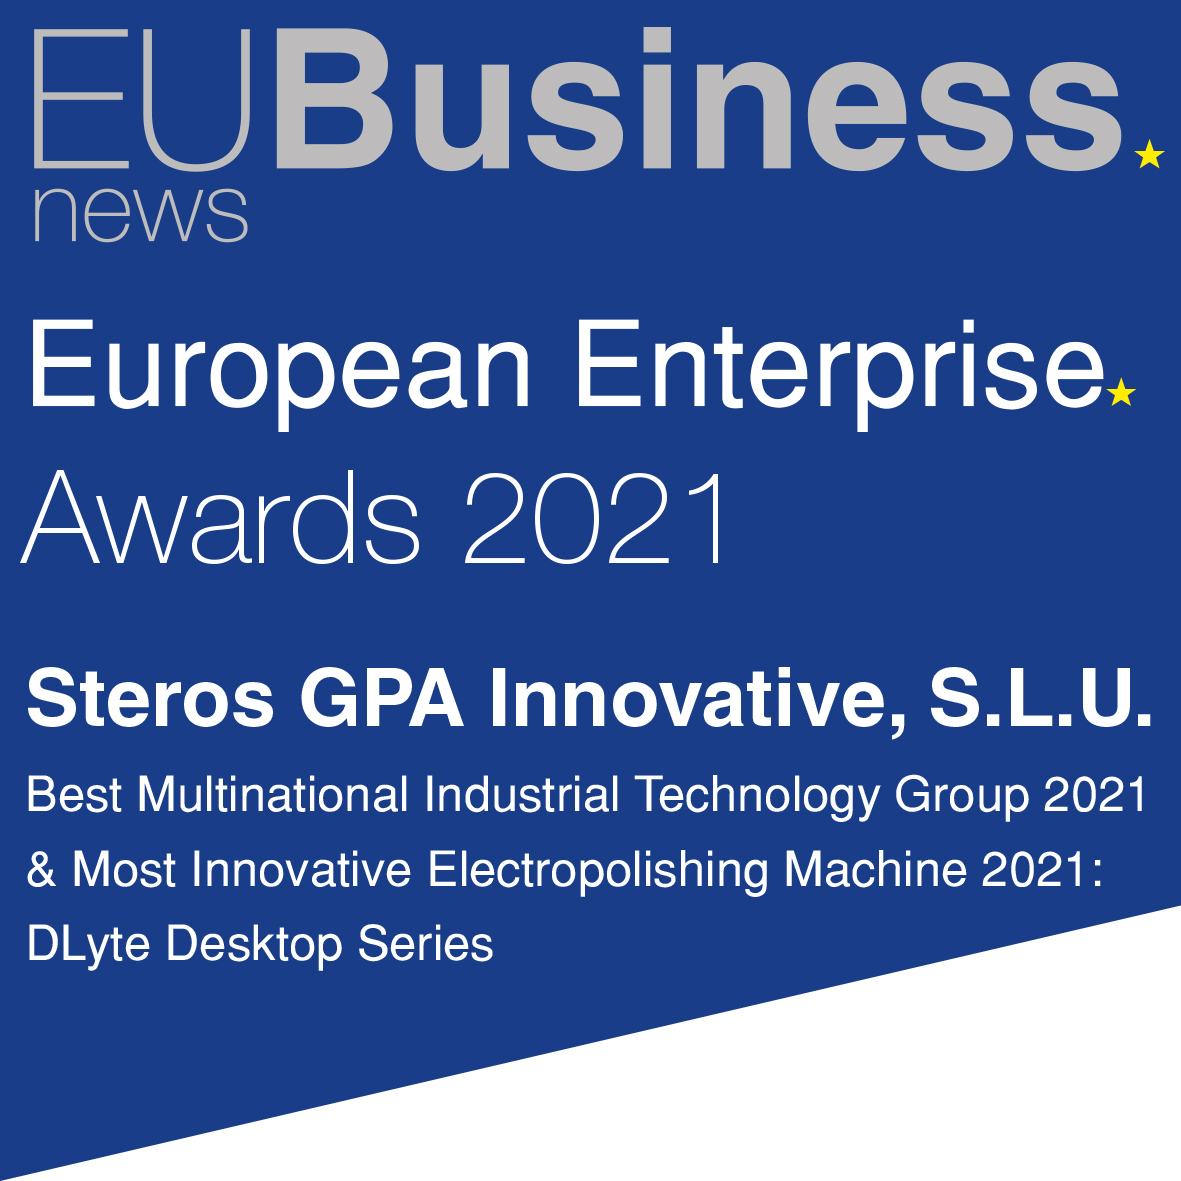 GPAINNOVA’s DLyte Desktop Series, selected as the Most Innovative Electropolishing Machine 2021 in the European Enterprise Awards